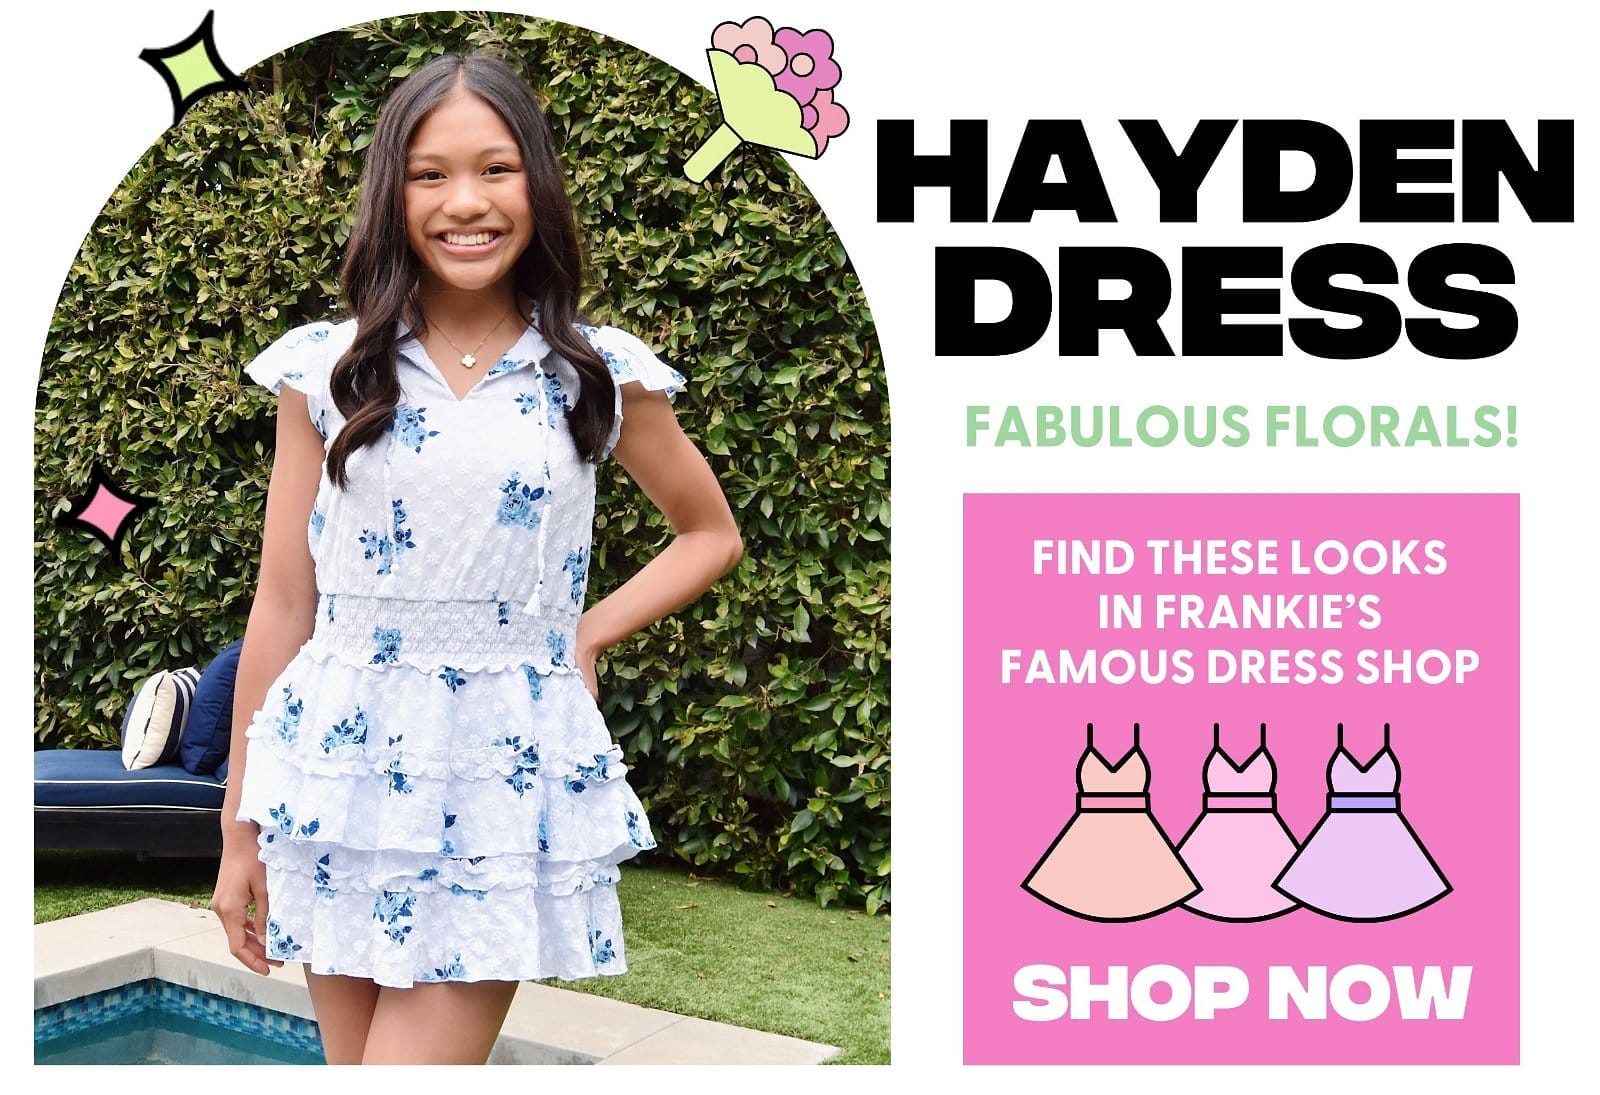 Hayden Dress Fabulous Florals! Find these looks in Frankie's famous dress shop - Shop Now